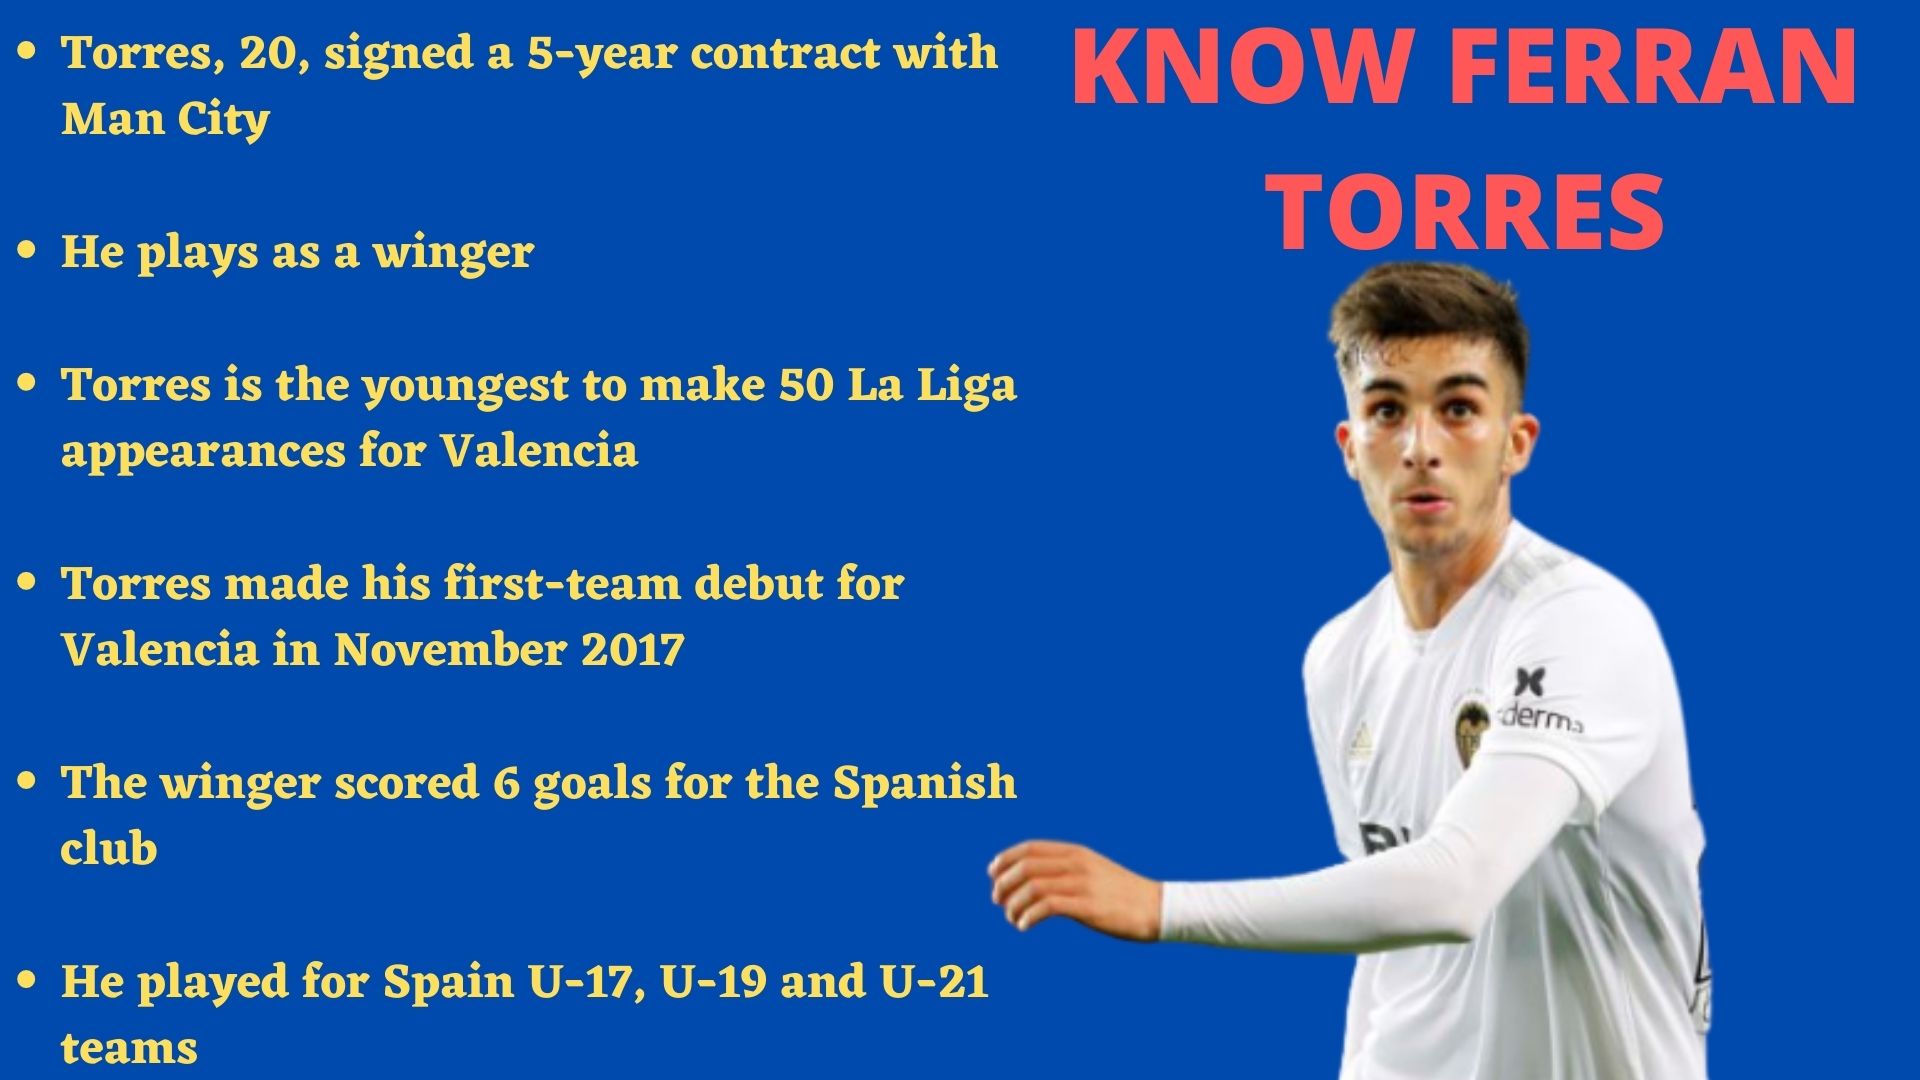 A few details about Ferran Torres.